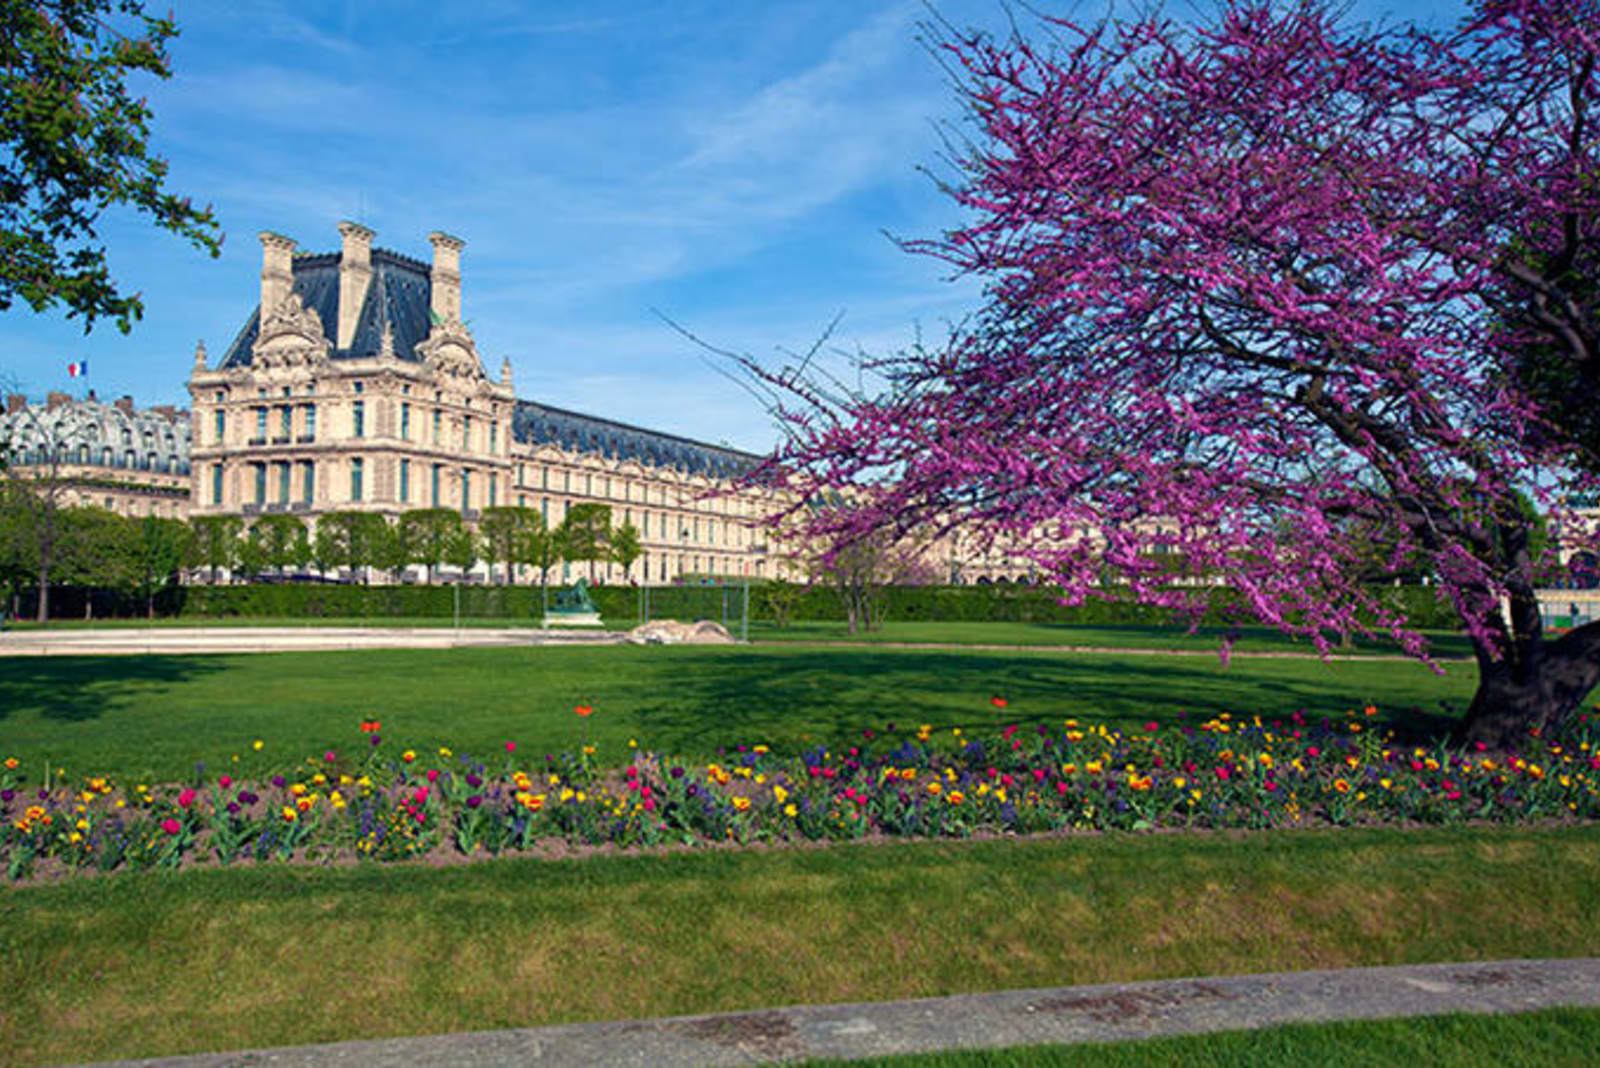 The Tuileries garden in paris - multicoloured flowers alongside a tree in bloom with deep purple flowers